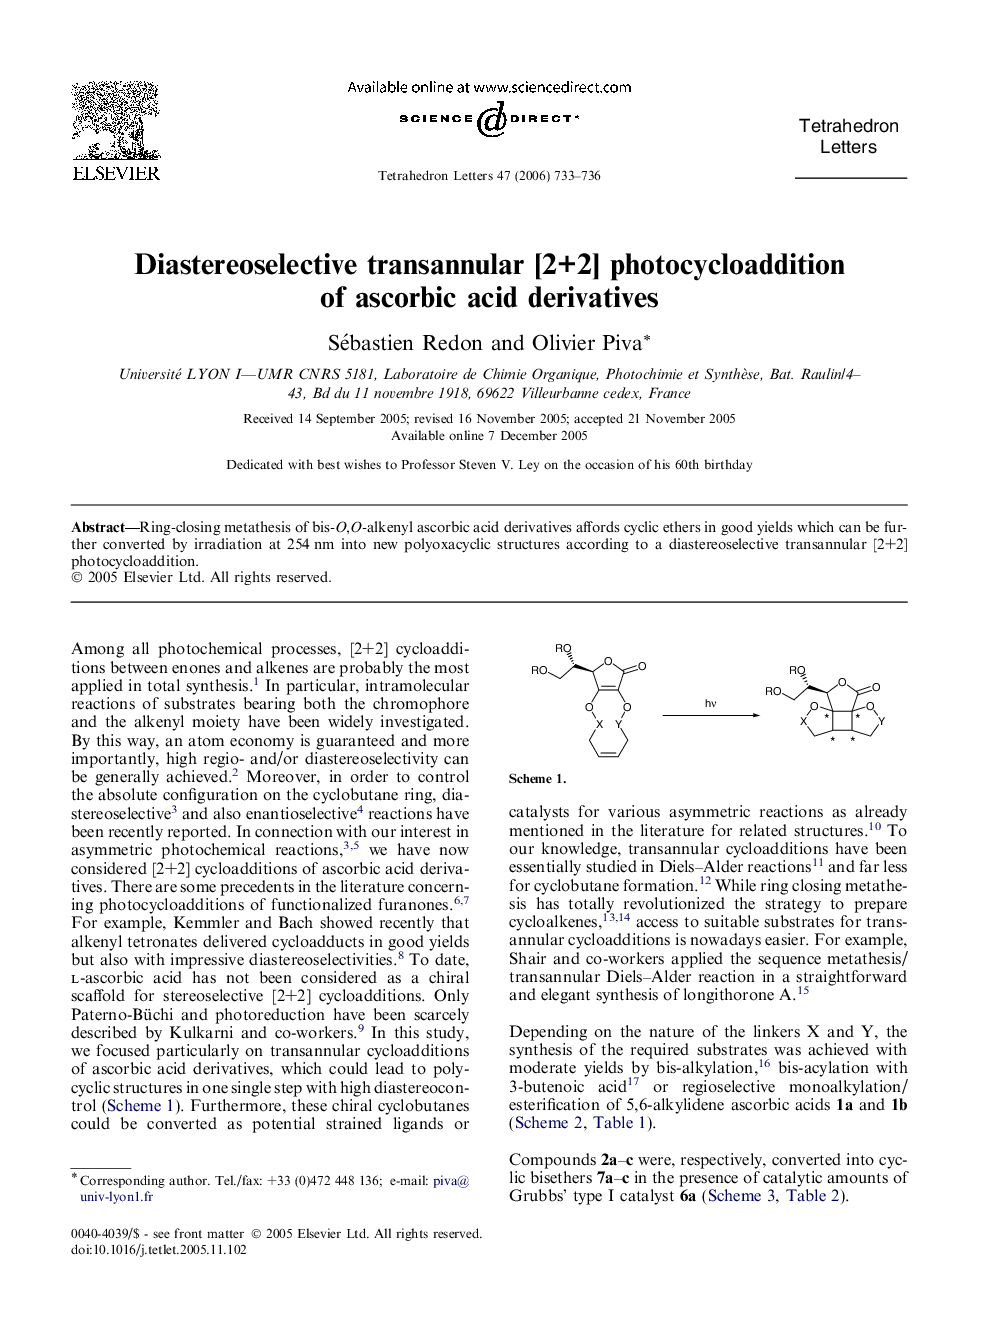 Diastereoselective transannular [2+2] photocycloaddition of ascorbic acid derivatives